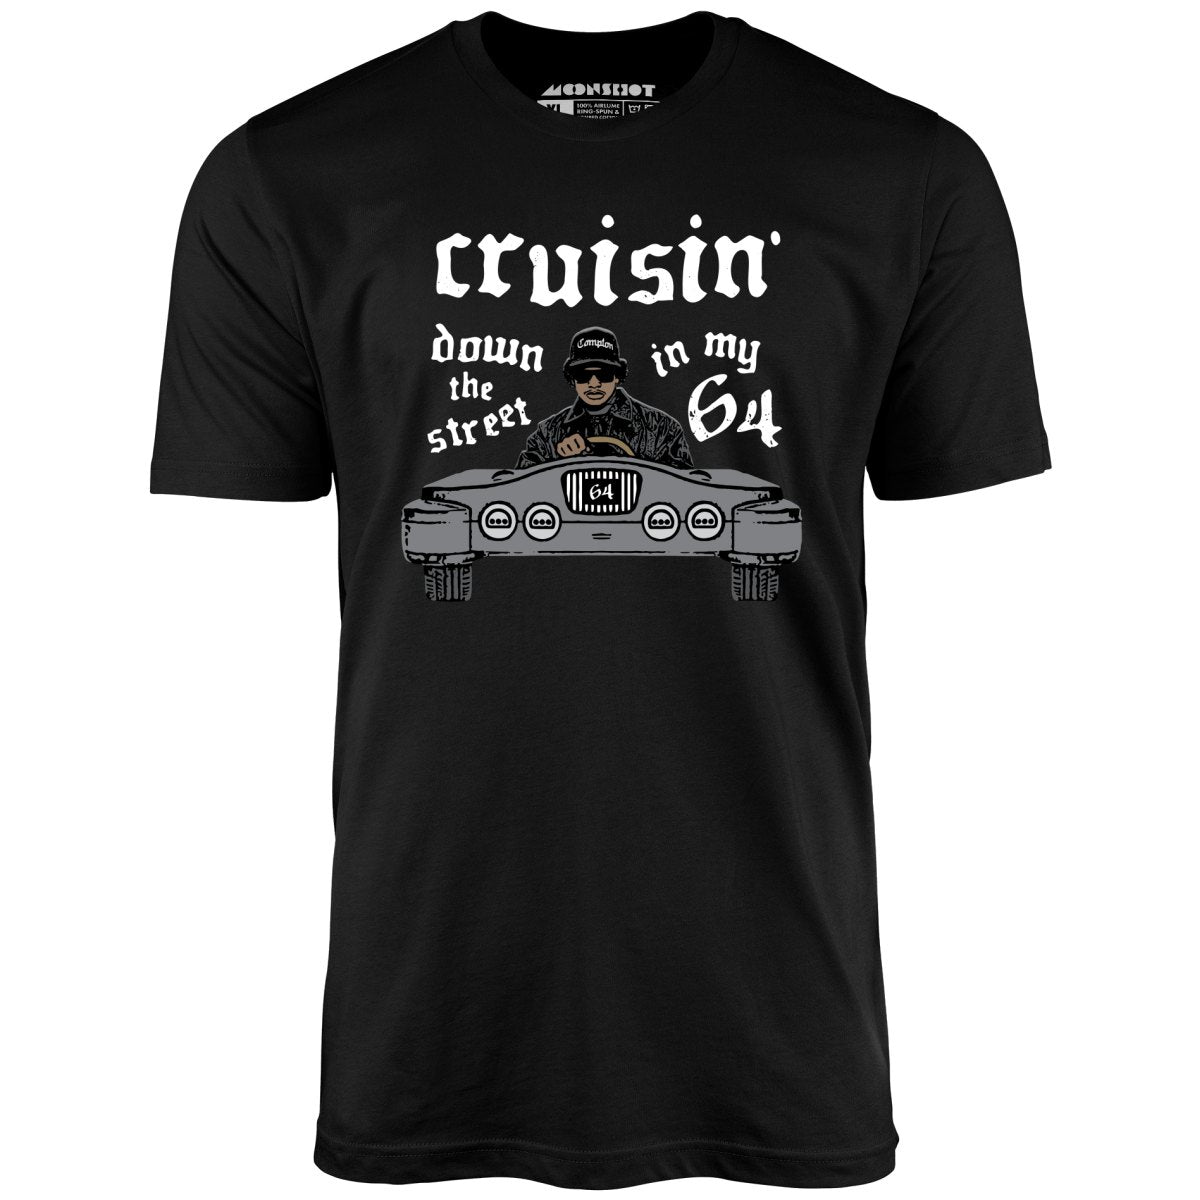 Cruisin' Down the Street in My 64 - Unisex T-Shirt